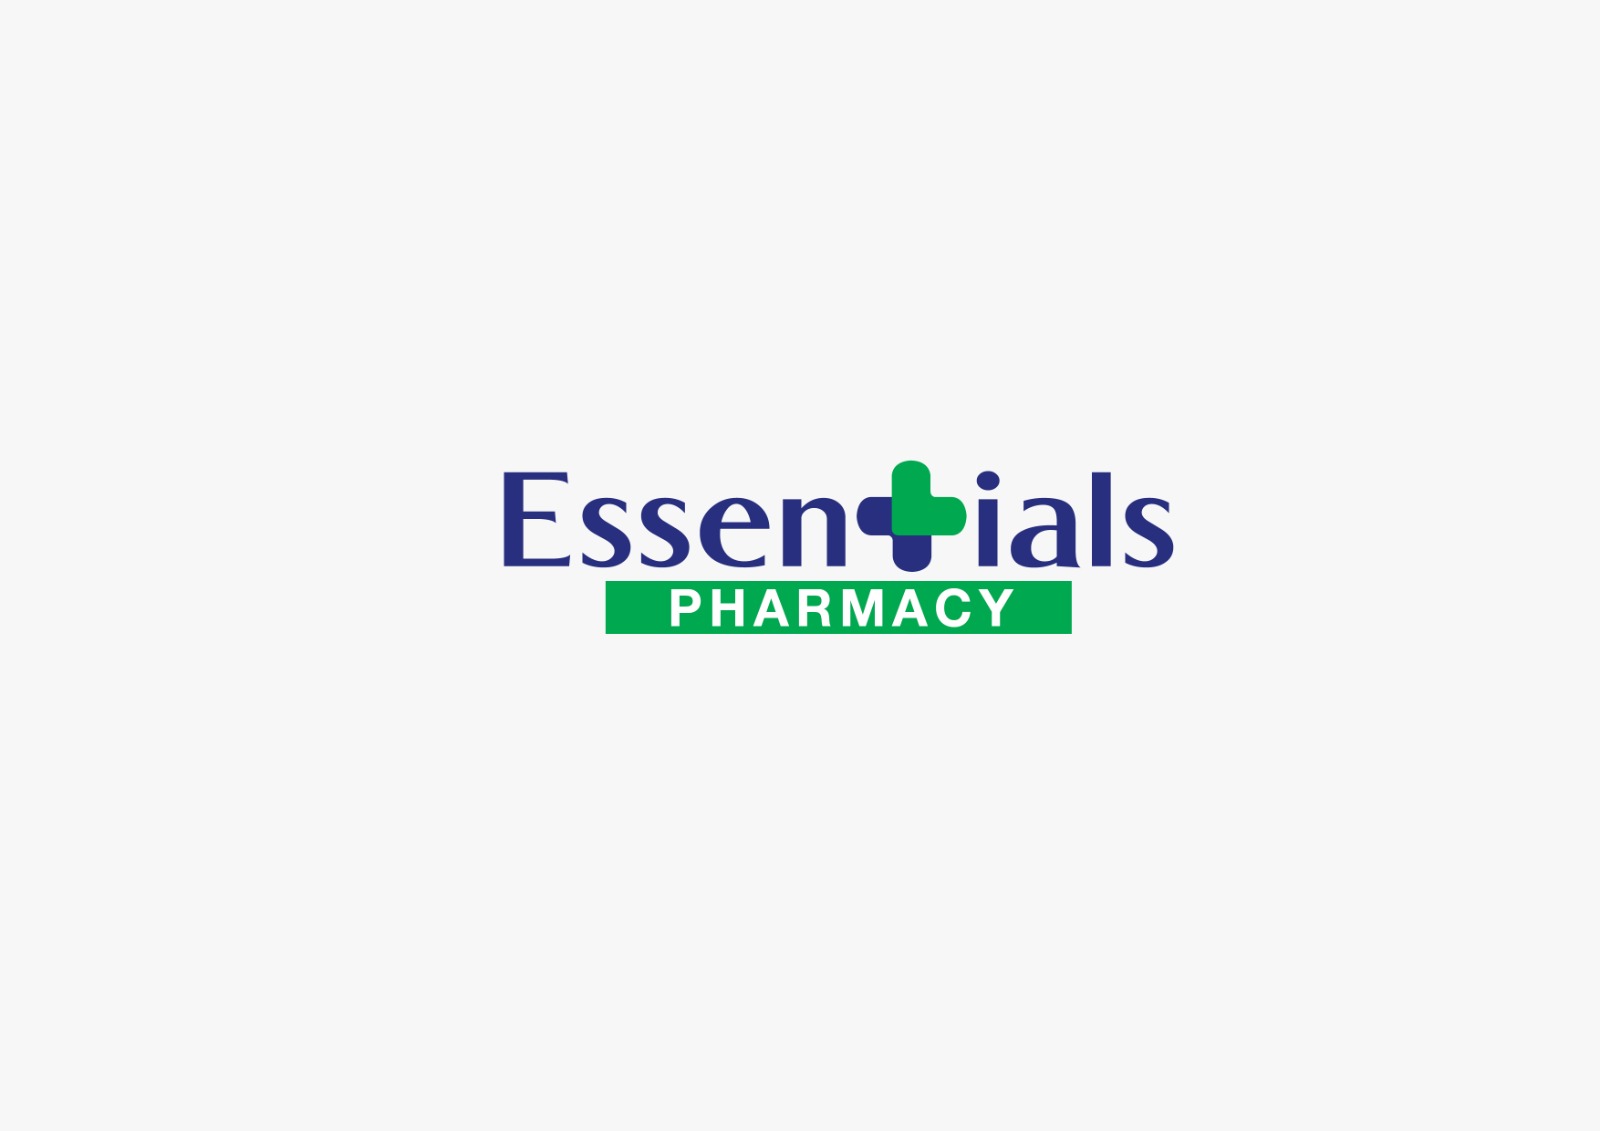 Essentials Pharmacy logo